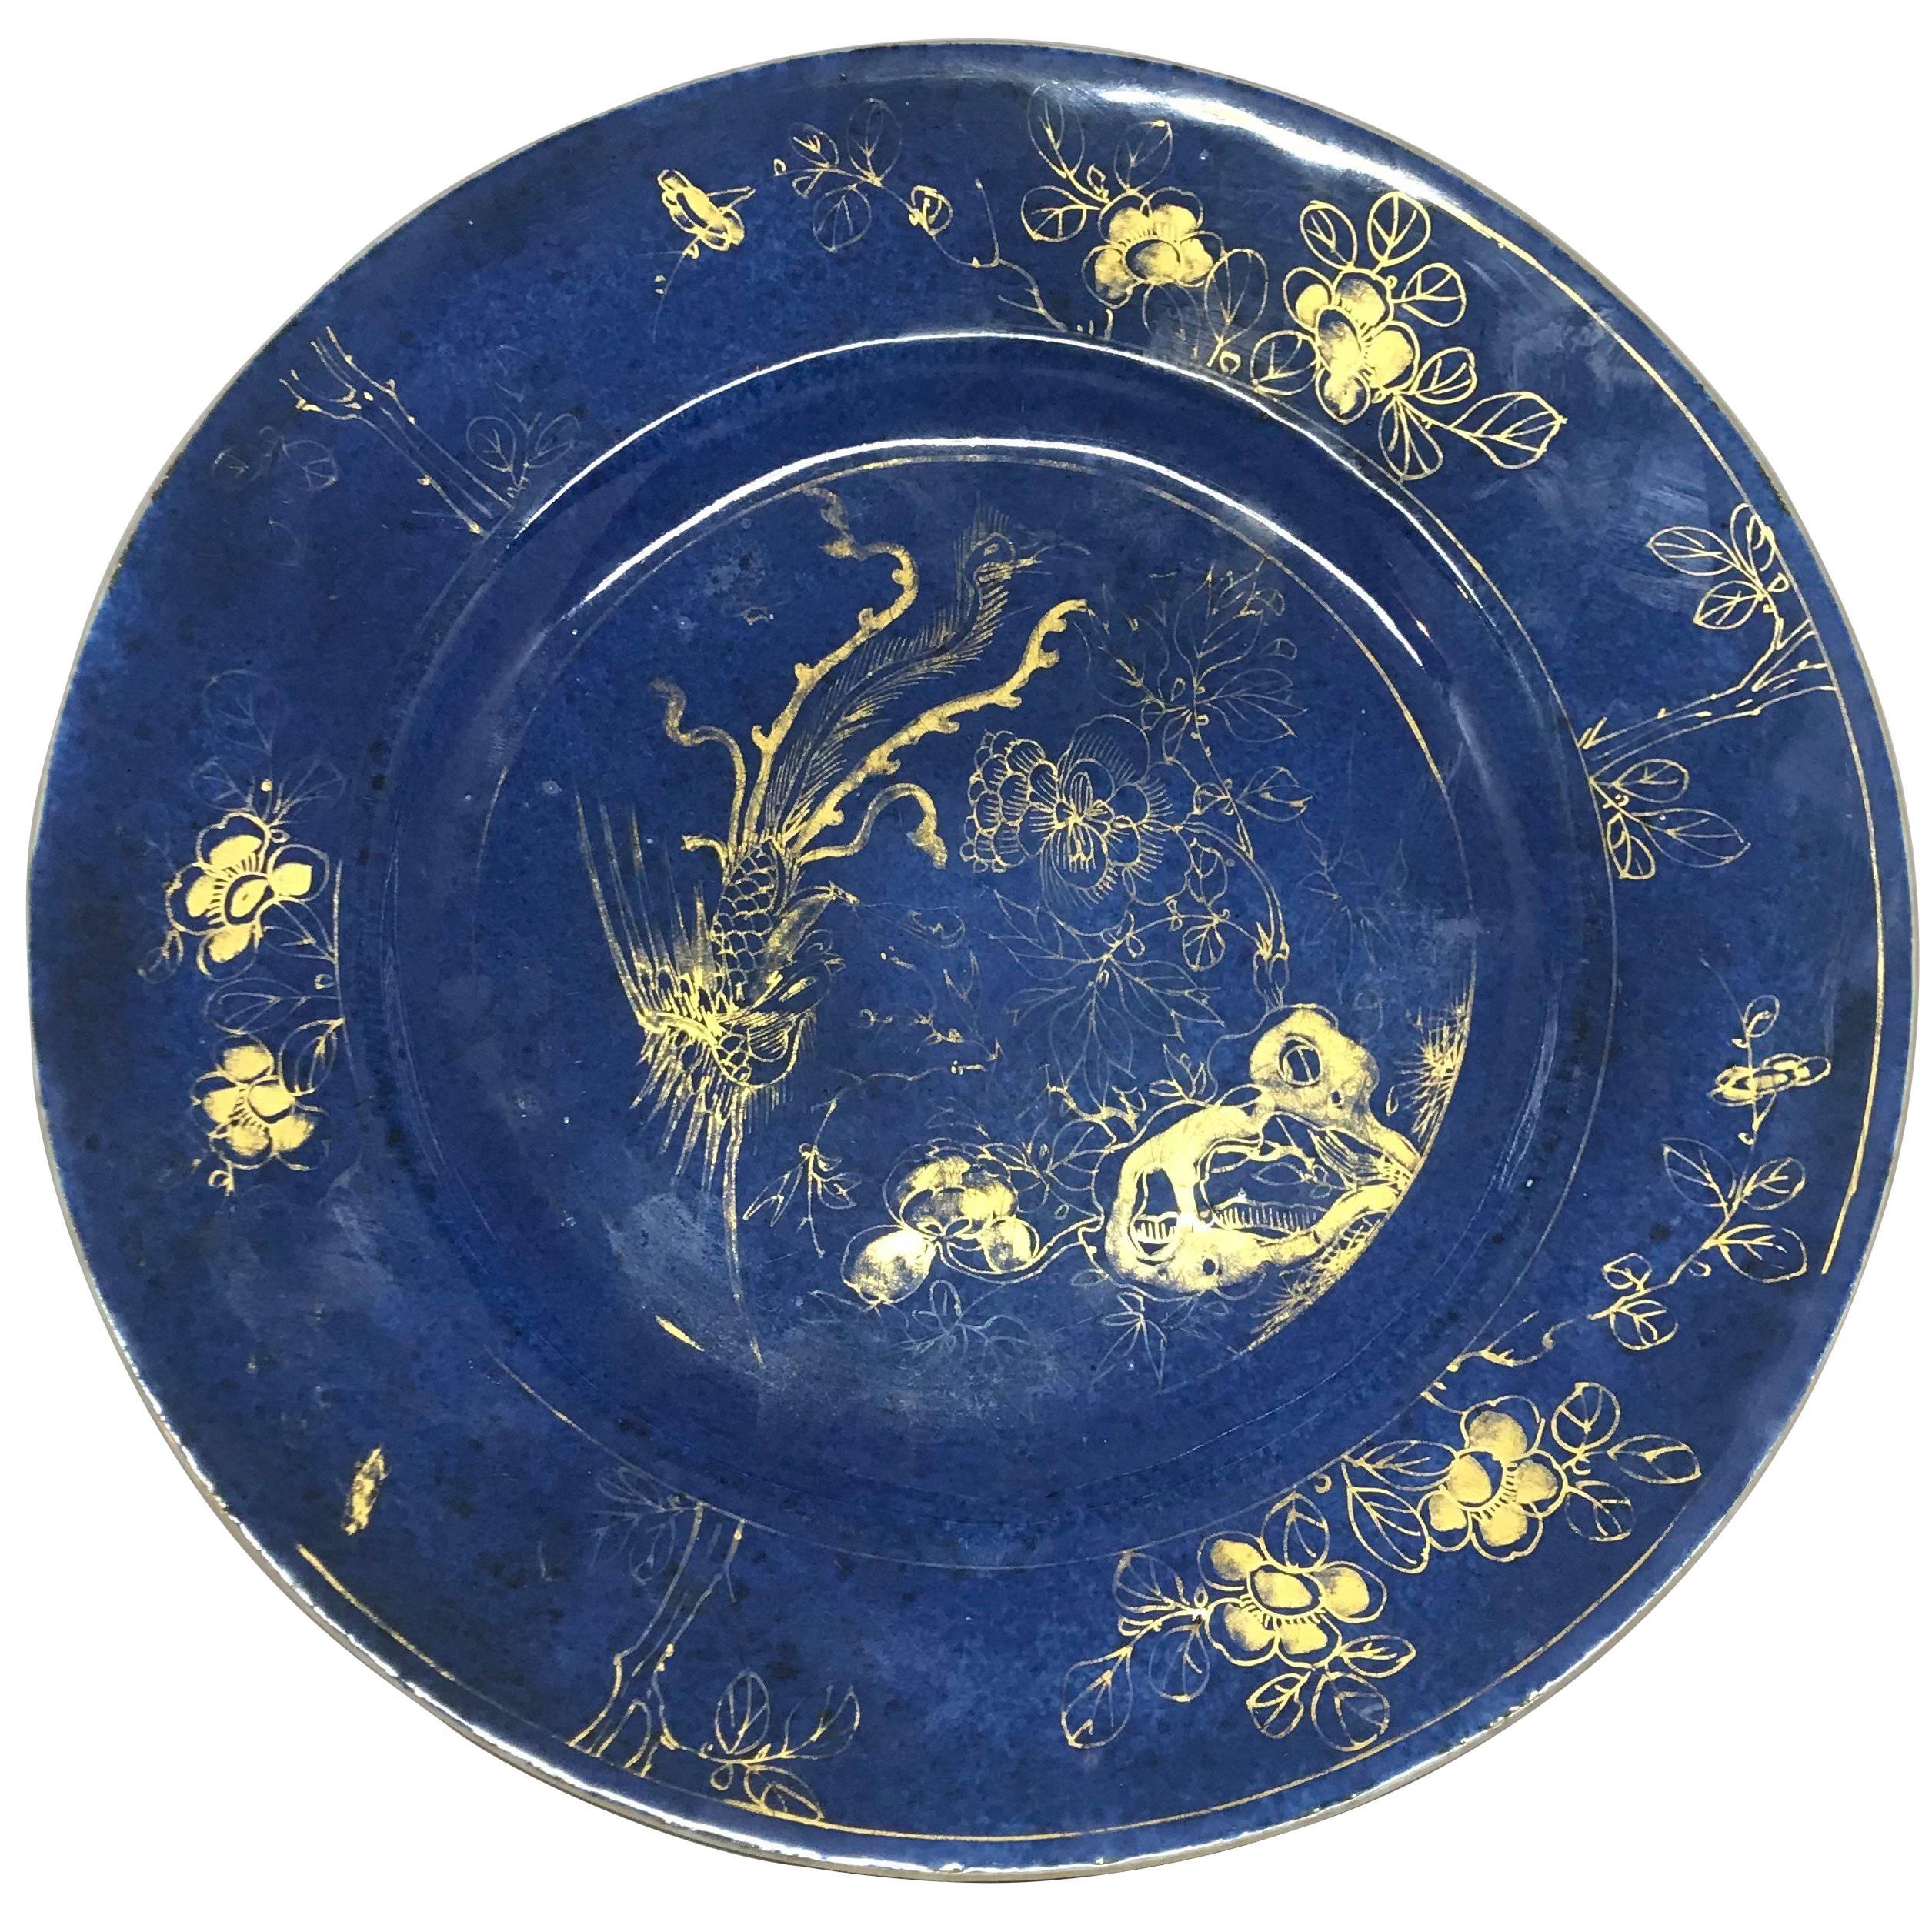 Powder Blue and Gilt Kangxi Period Plate